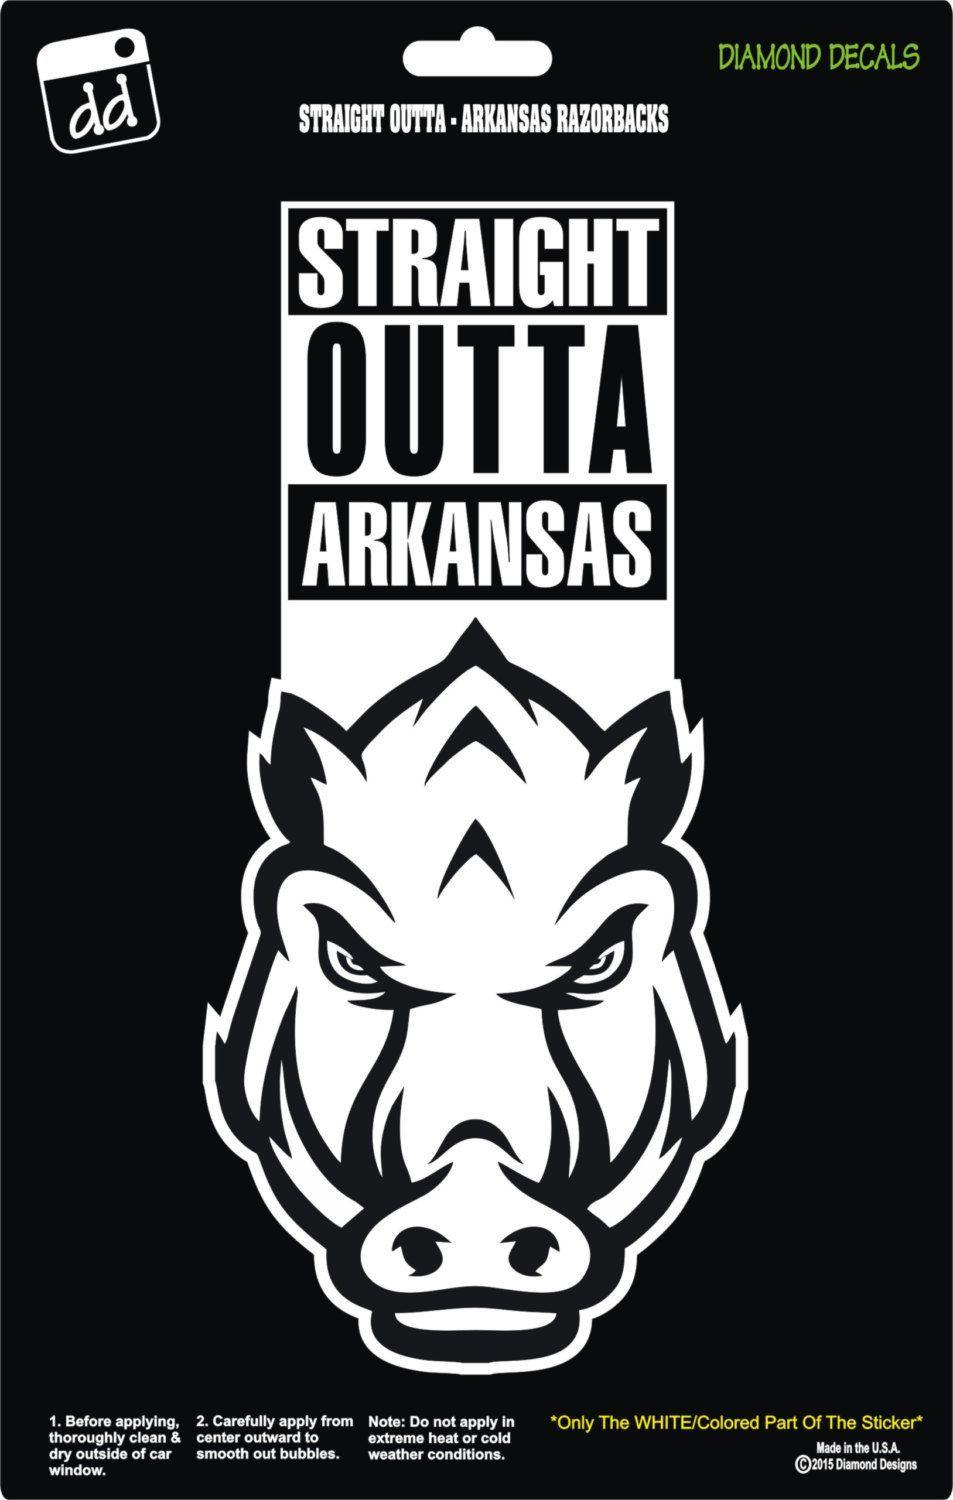 Arkansas Diamond Logo - Straight Outta Arkansas Razorbacks College Football Logo Decal Vinyl